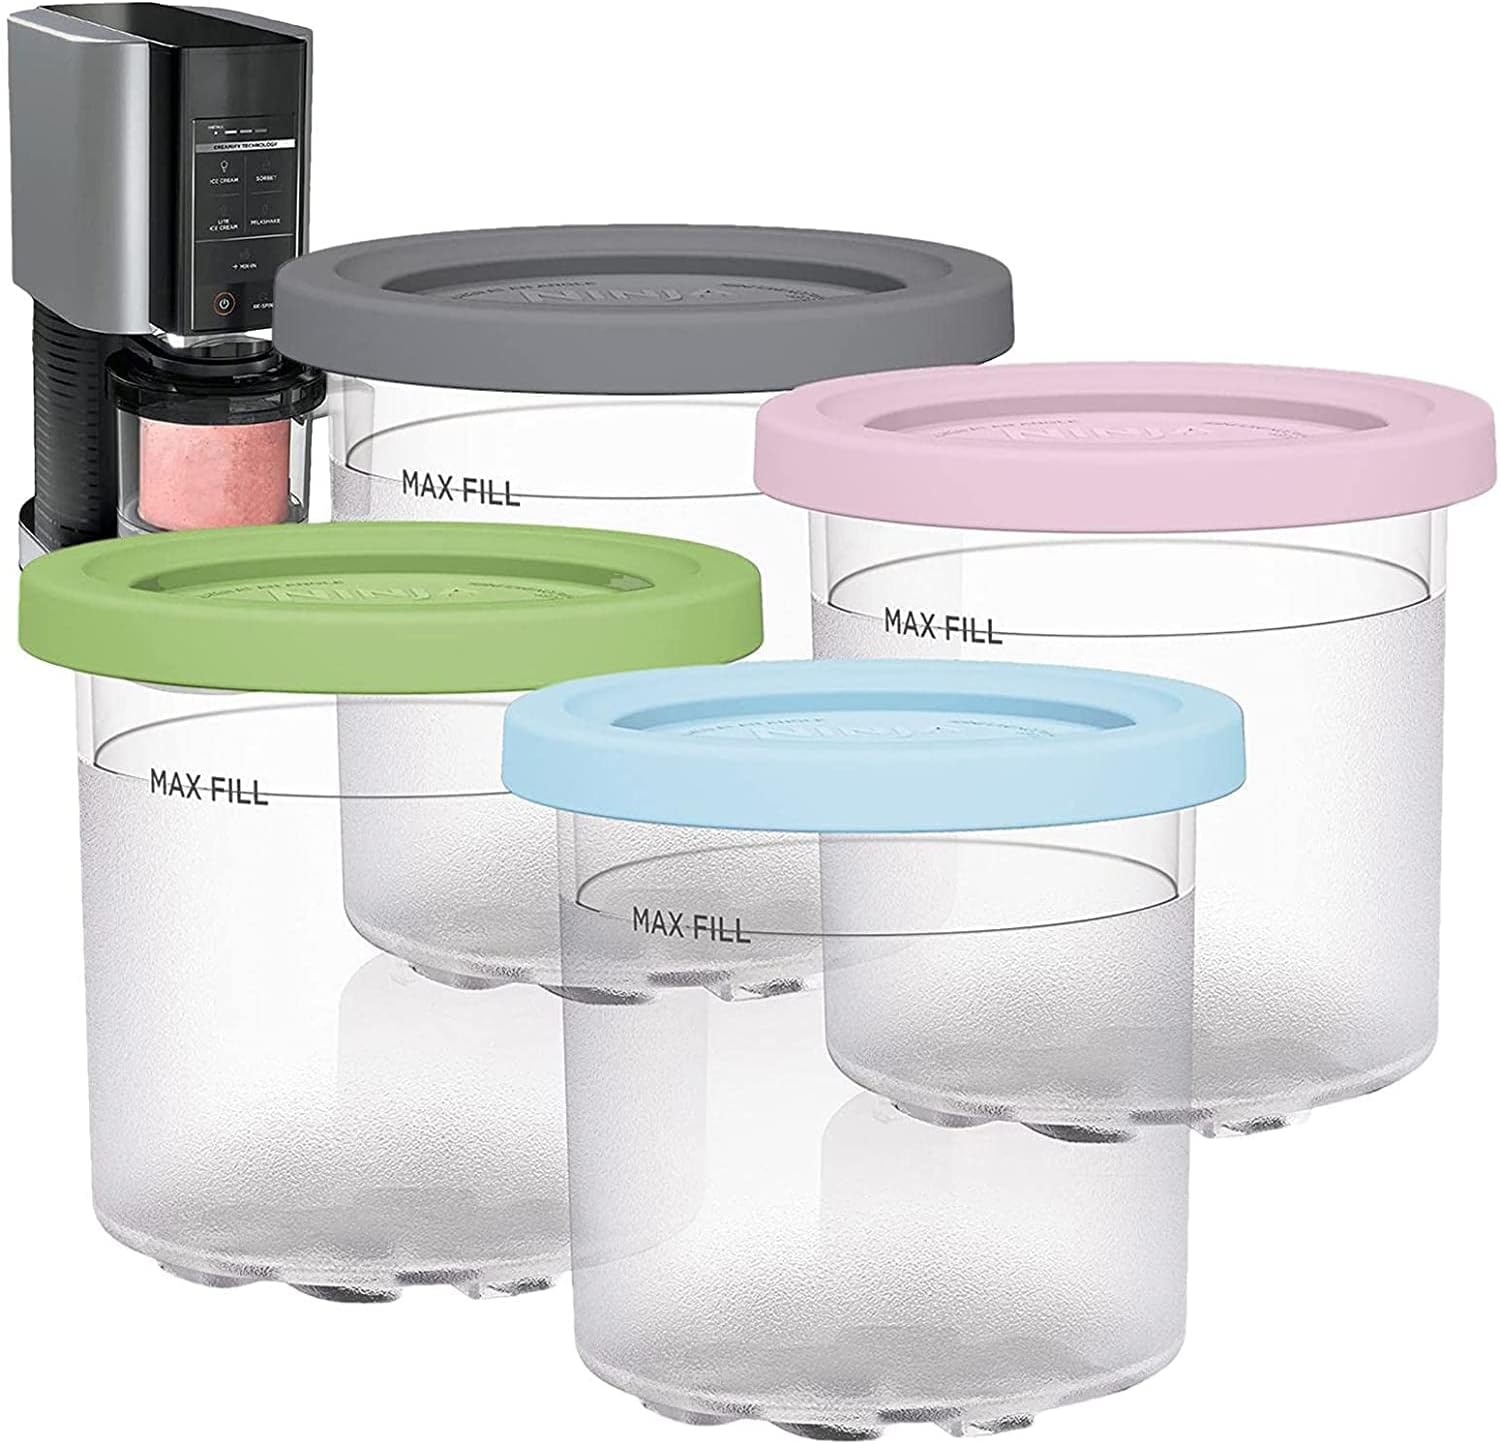 SXIIO Pack of 4 Creami Tubs for Ninja Creami, Reusable Ninja Ice Cream Machine Accessories, BPA-Free and Dishwasher Safe, Airtight and Leaf-Proof